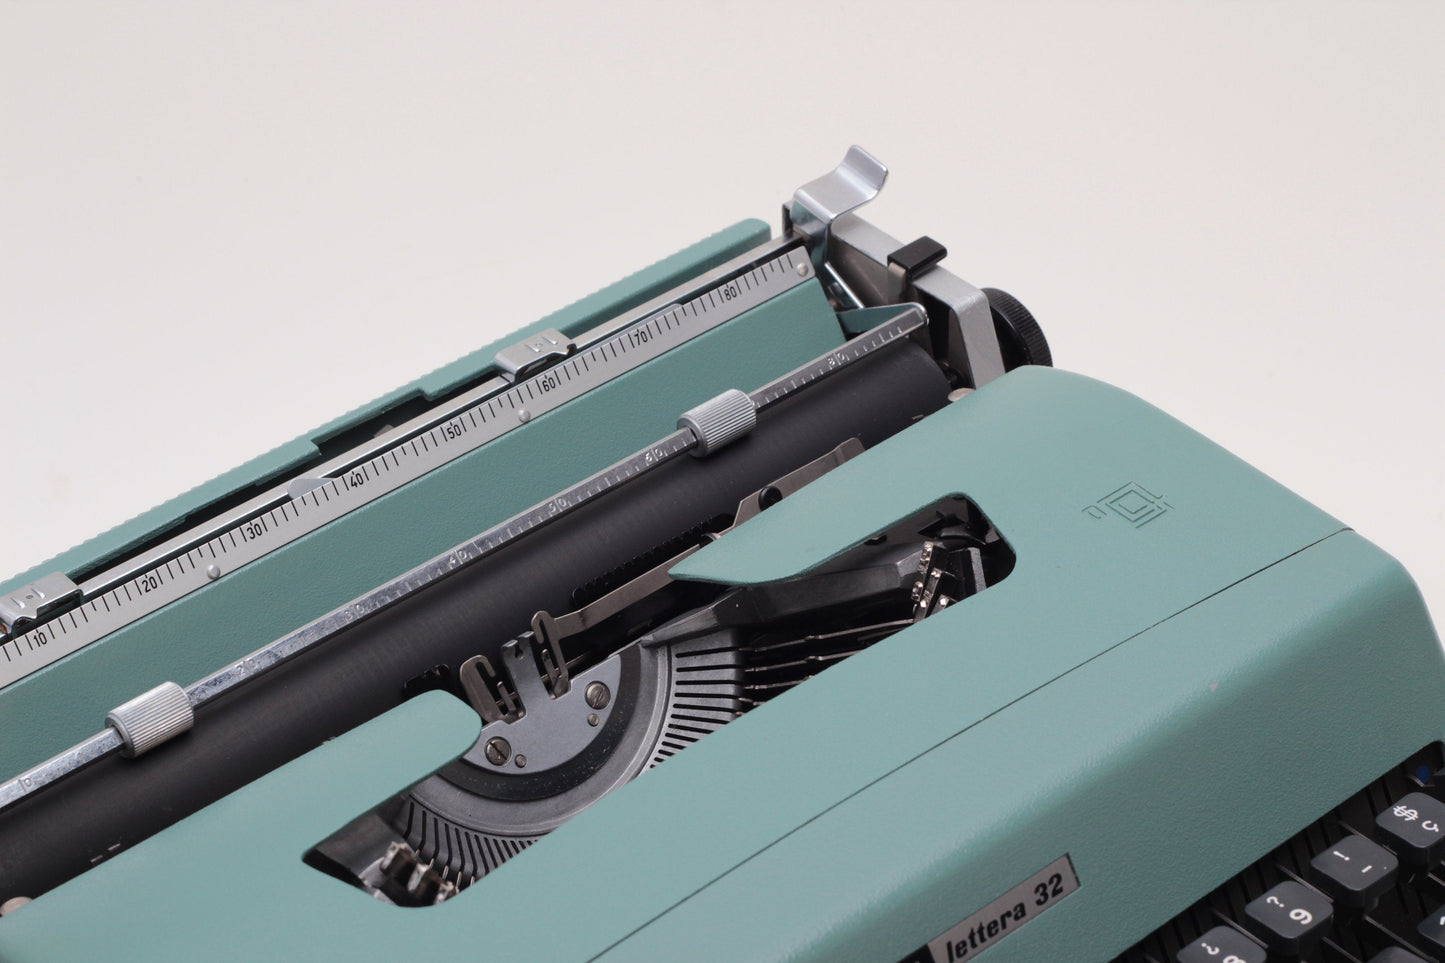 Olivetti Lettera 32 Original Green Vintage Manual Typewriter Serviced